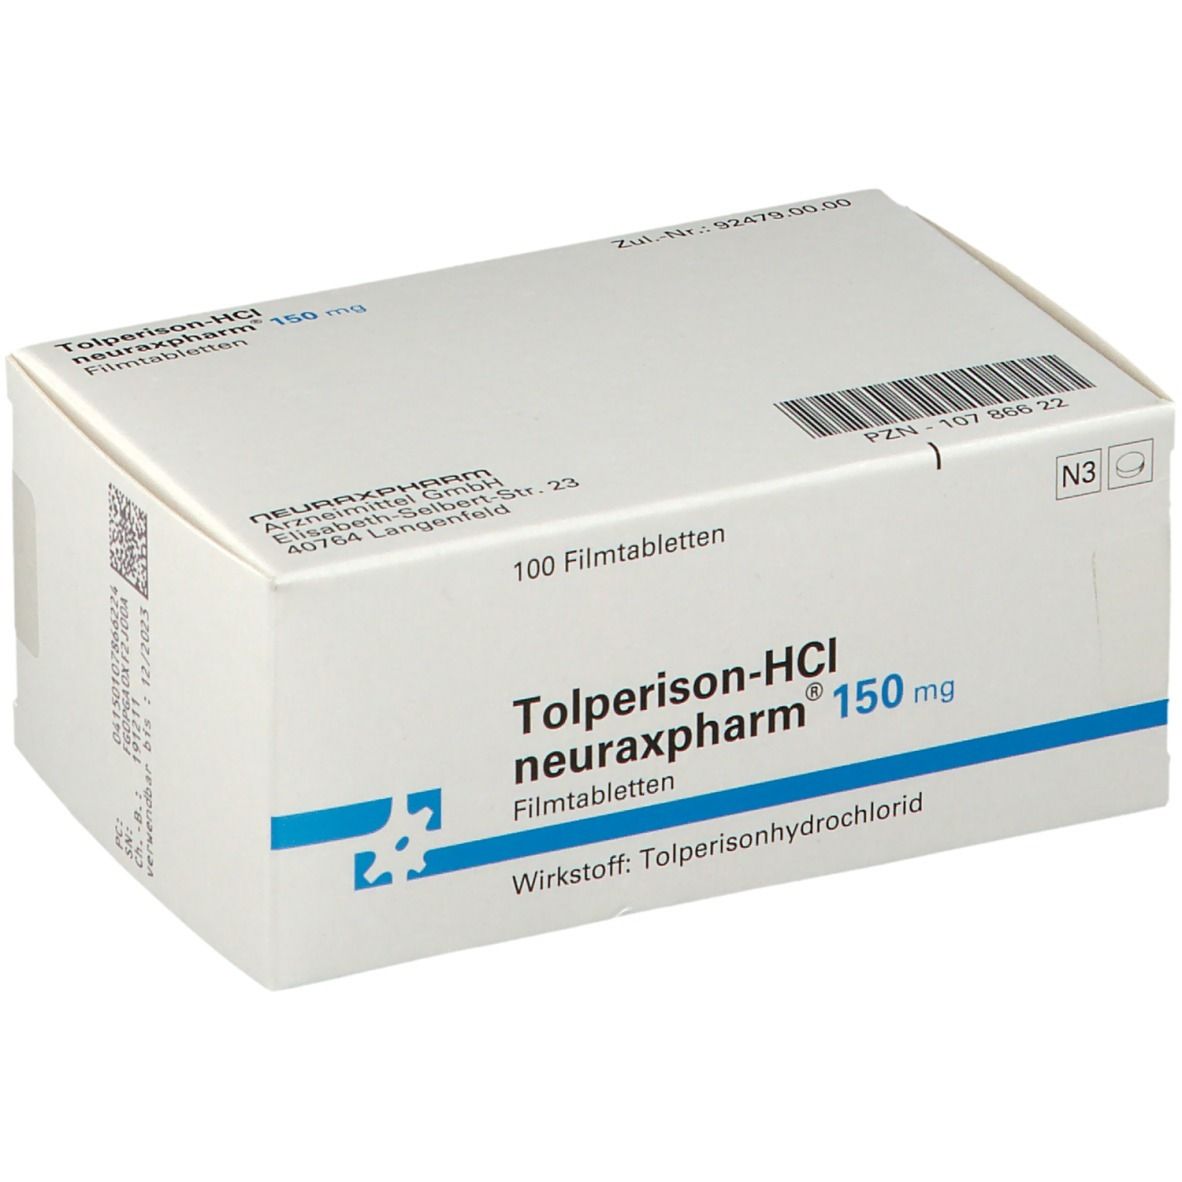 Tolperison-HCl neuraxpharm® 150 mg